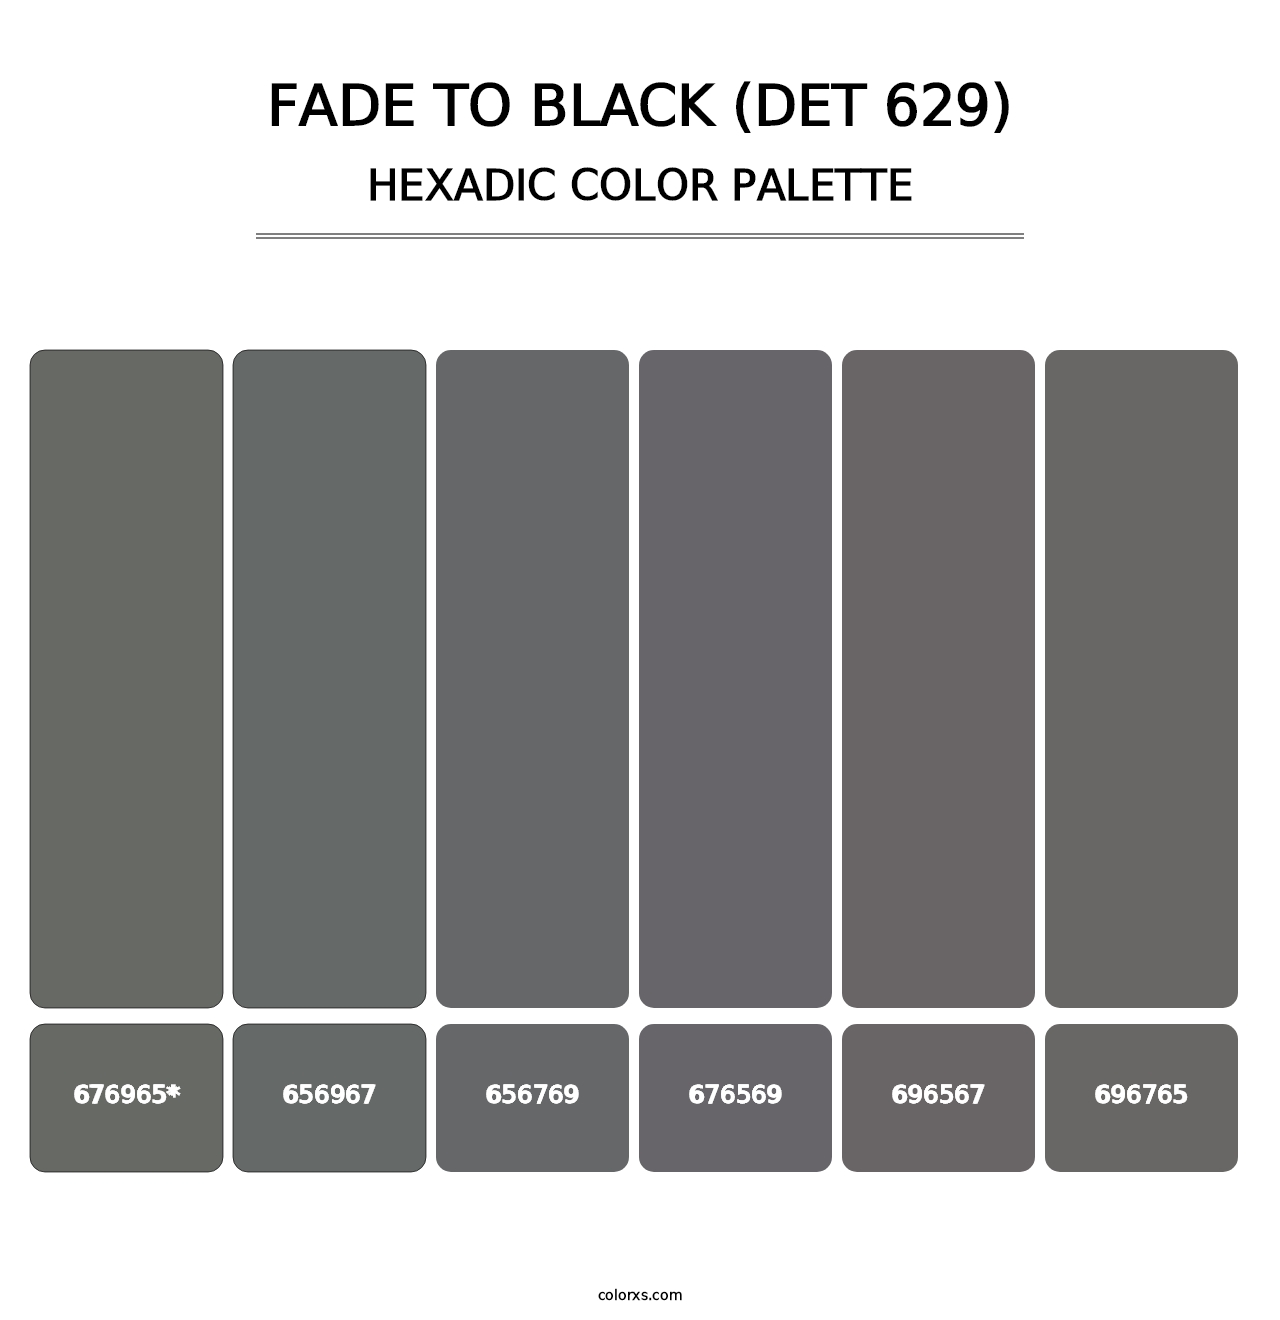 Fade to Black (DET 629) - Hexadic Color Palette